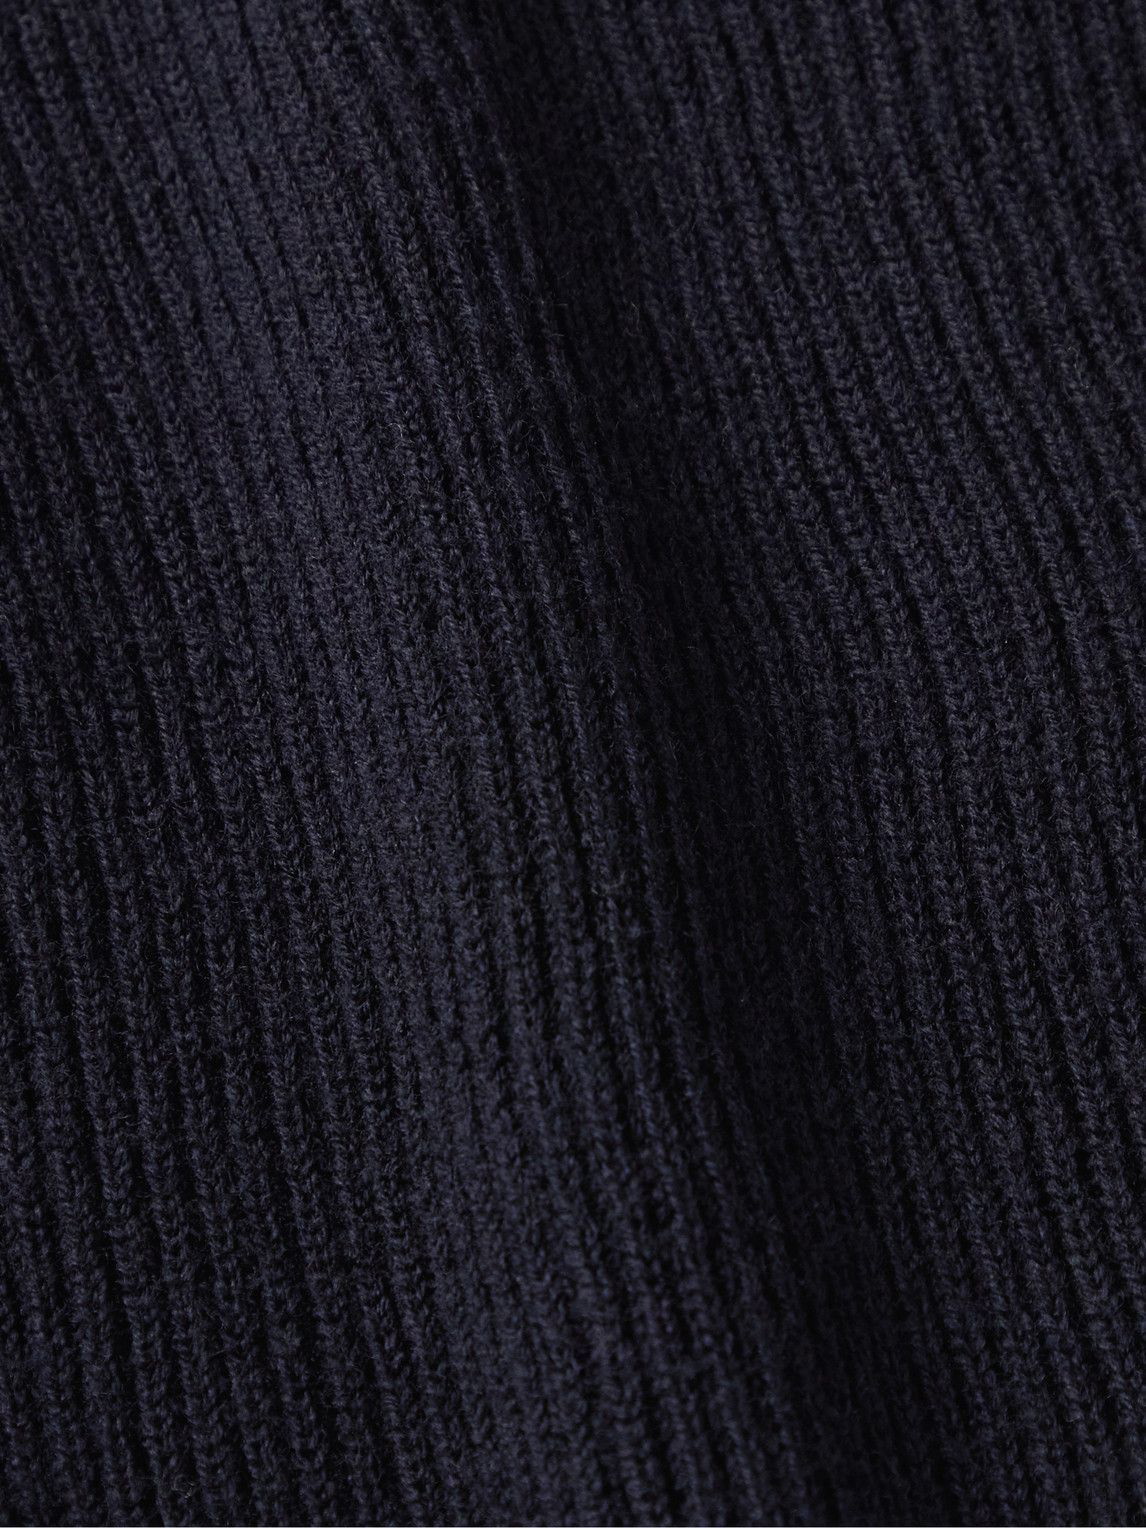 NN07 - Holger Ribbed Wool Half-Zip Sweater - Blue NN07